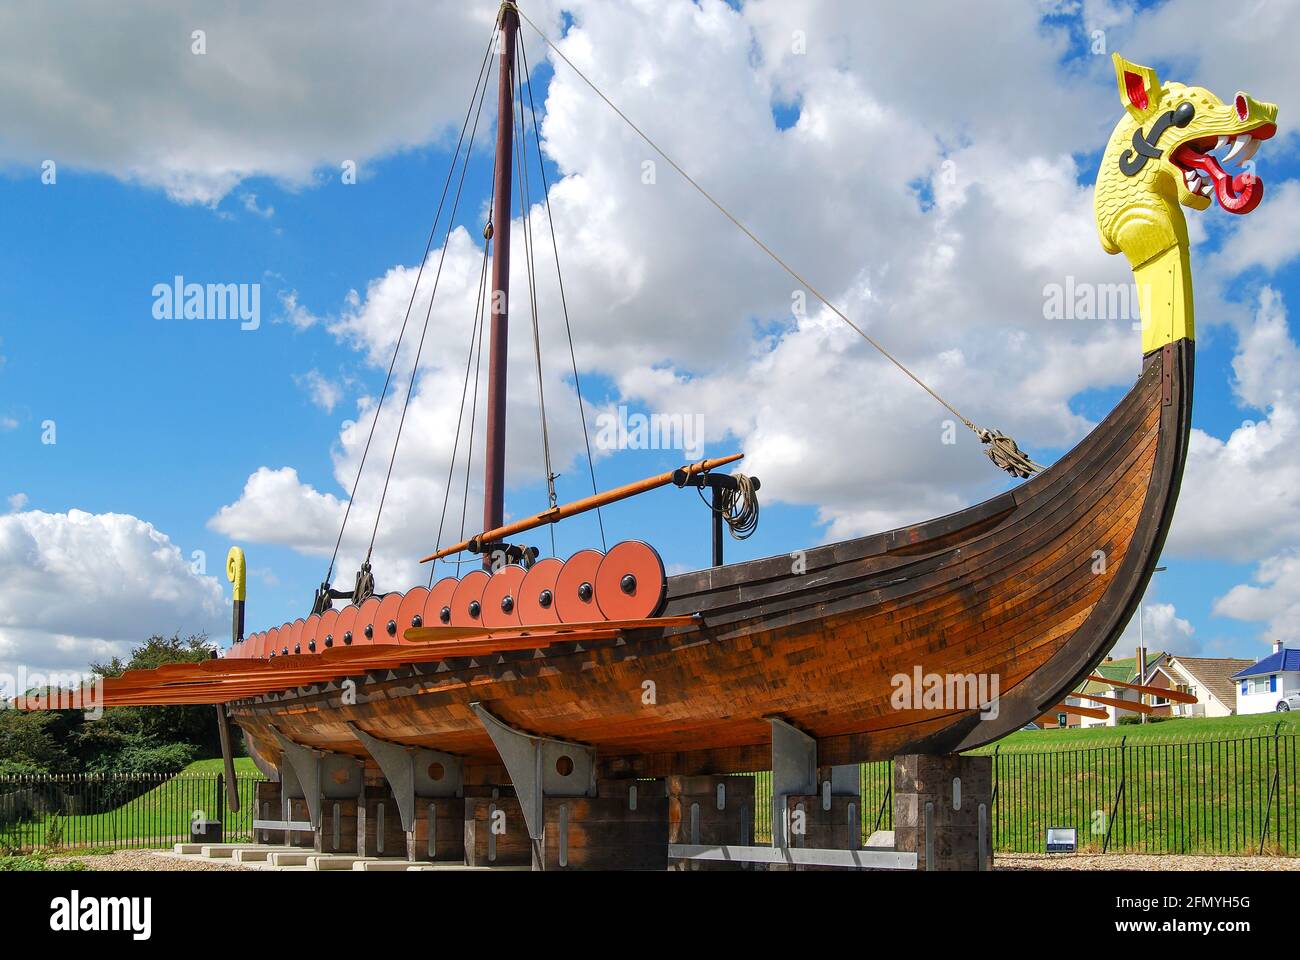 The 'Hugin' Replica Viking Ship, Pegwell Bay, Kent, England, United Kingdom Stock Photo